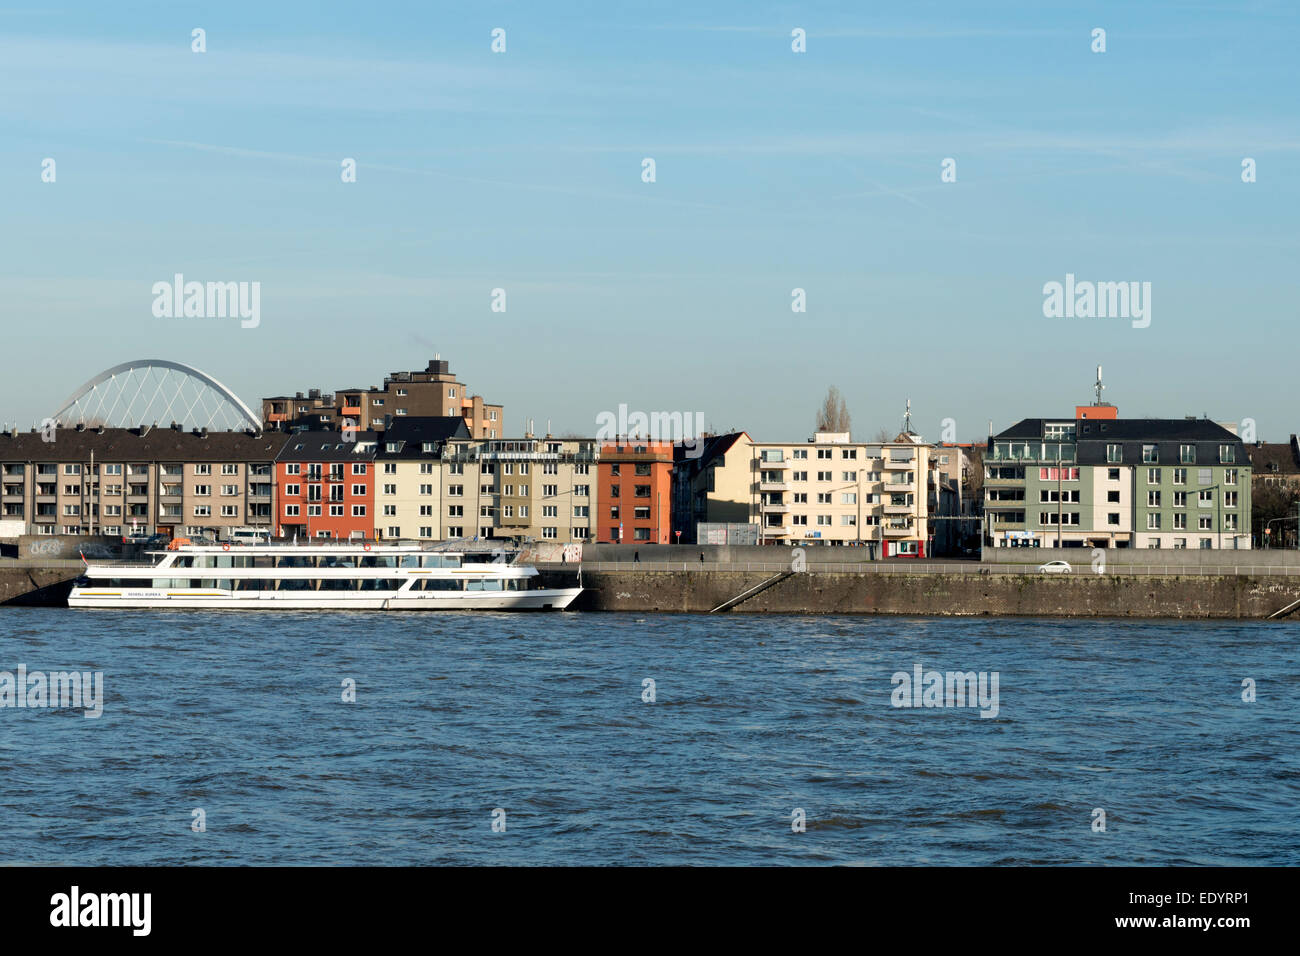 Rederij Eureka cruise liner, Deutzer Werft, river Rhine, Cologne, Germany. Stock Photo